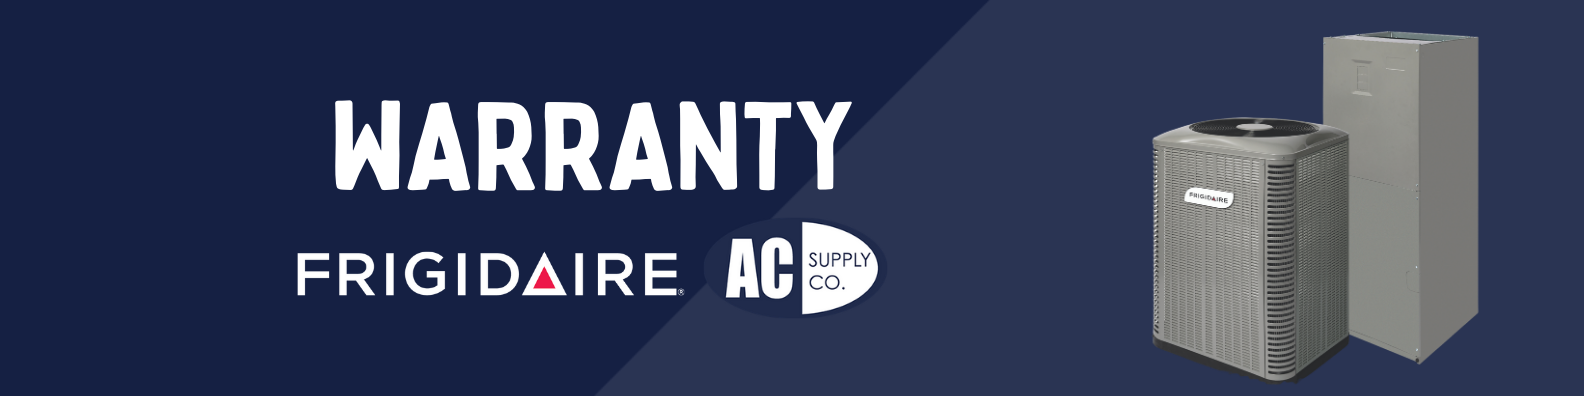 frigidaire-warranty-ac-supply-co